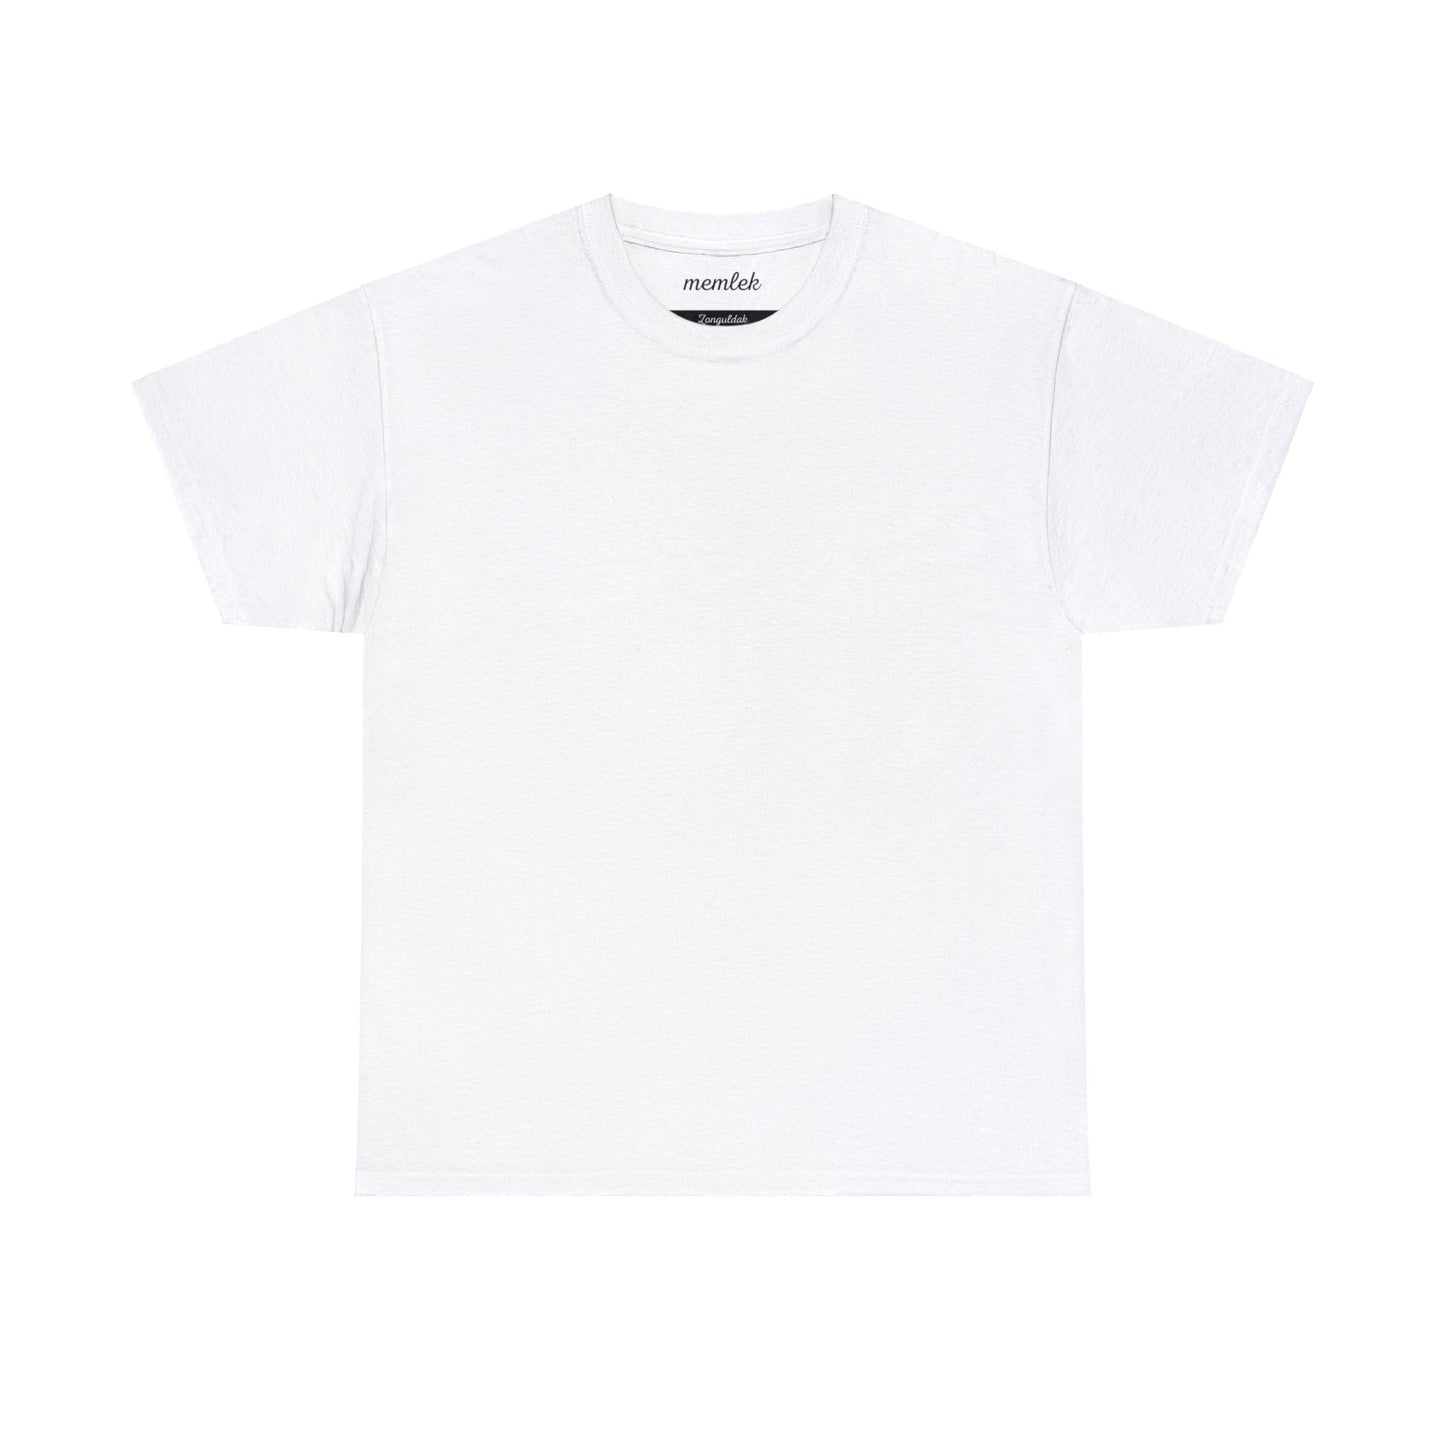 Kurt - 67 Zonguldak - T-Shirt - Back Print - Black/White